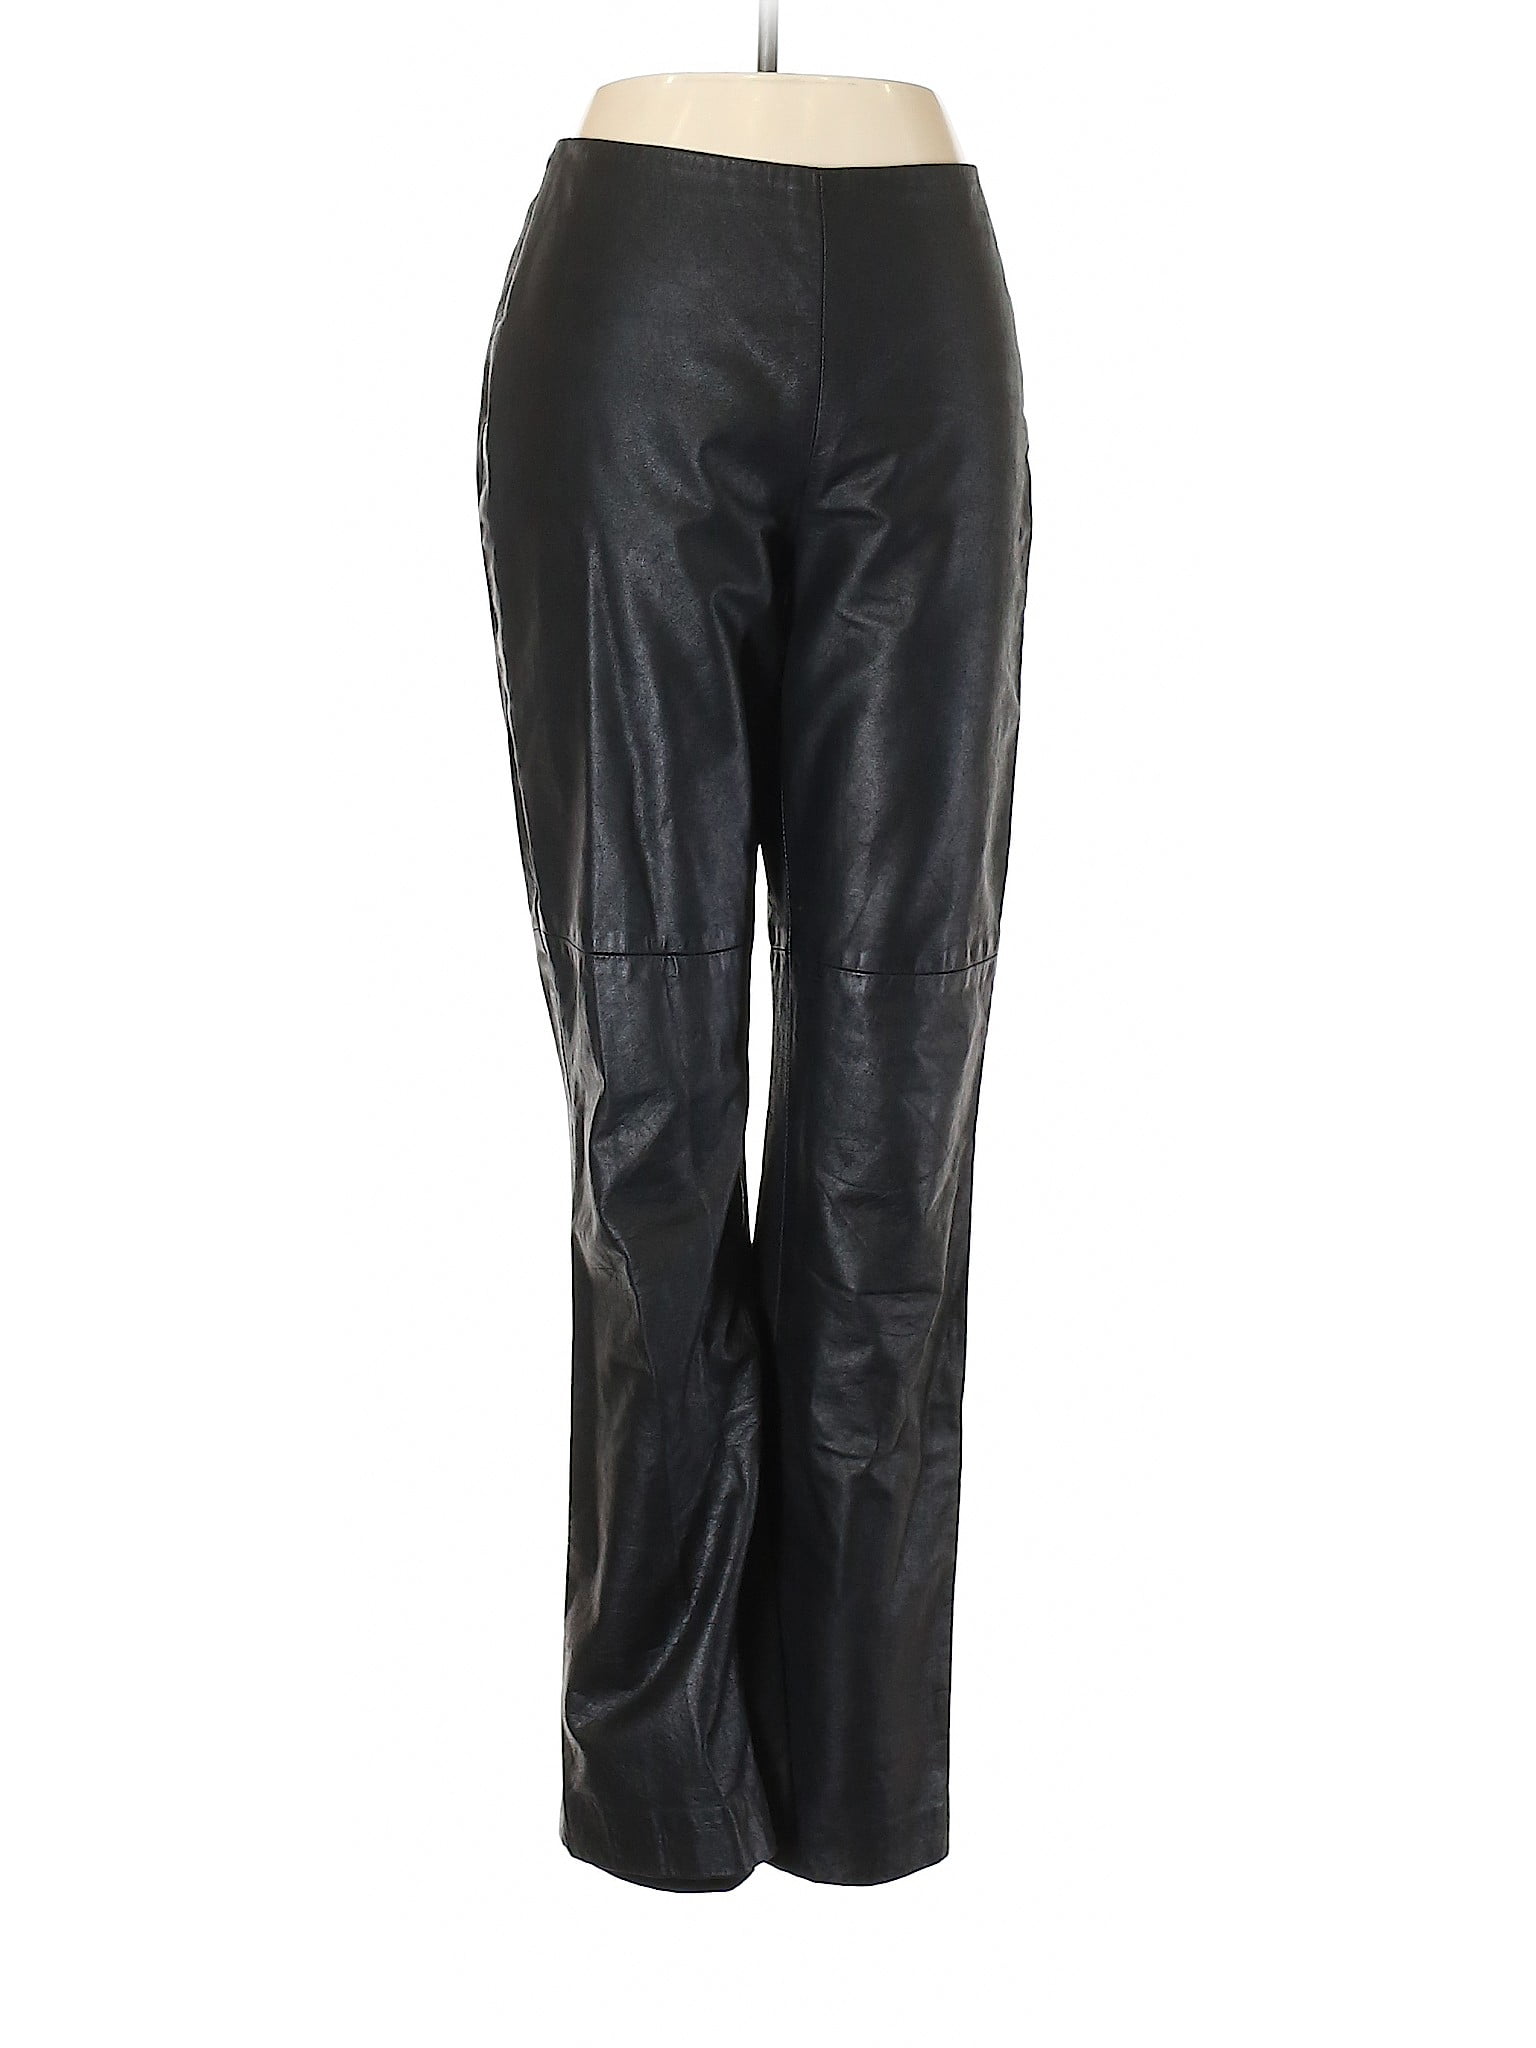 Cynthia Rowley - Pre-Owned Cynthia Rowley TJX Women's Size 6 Leather ...